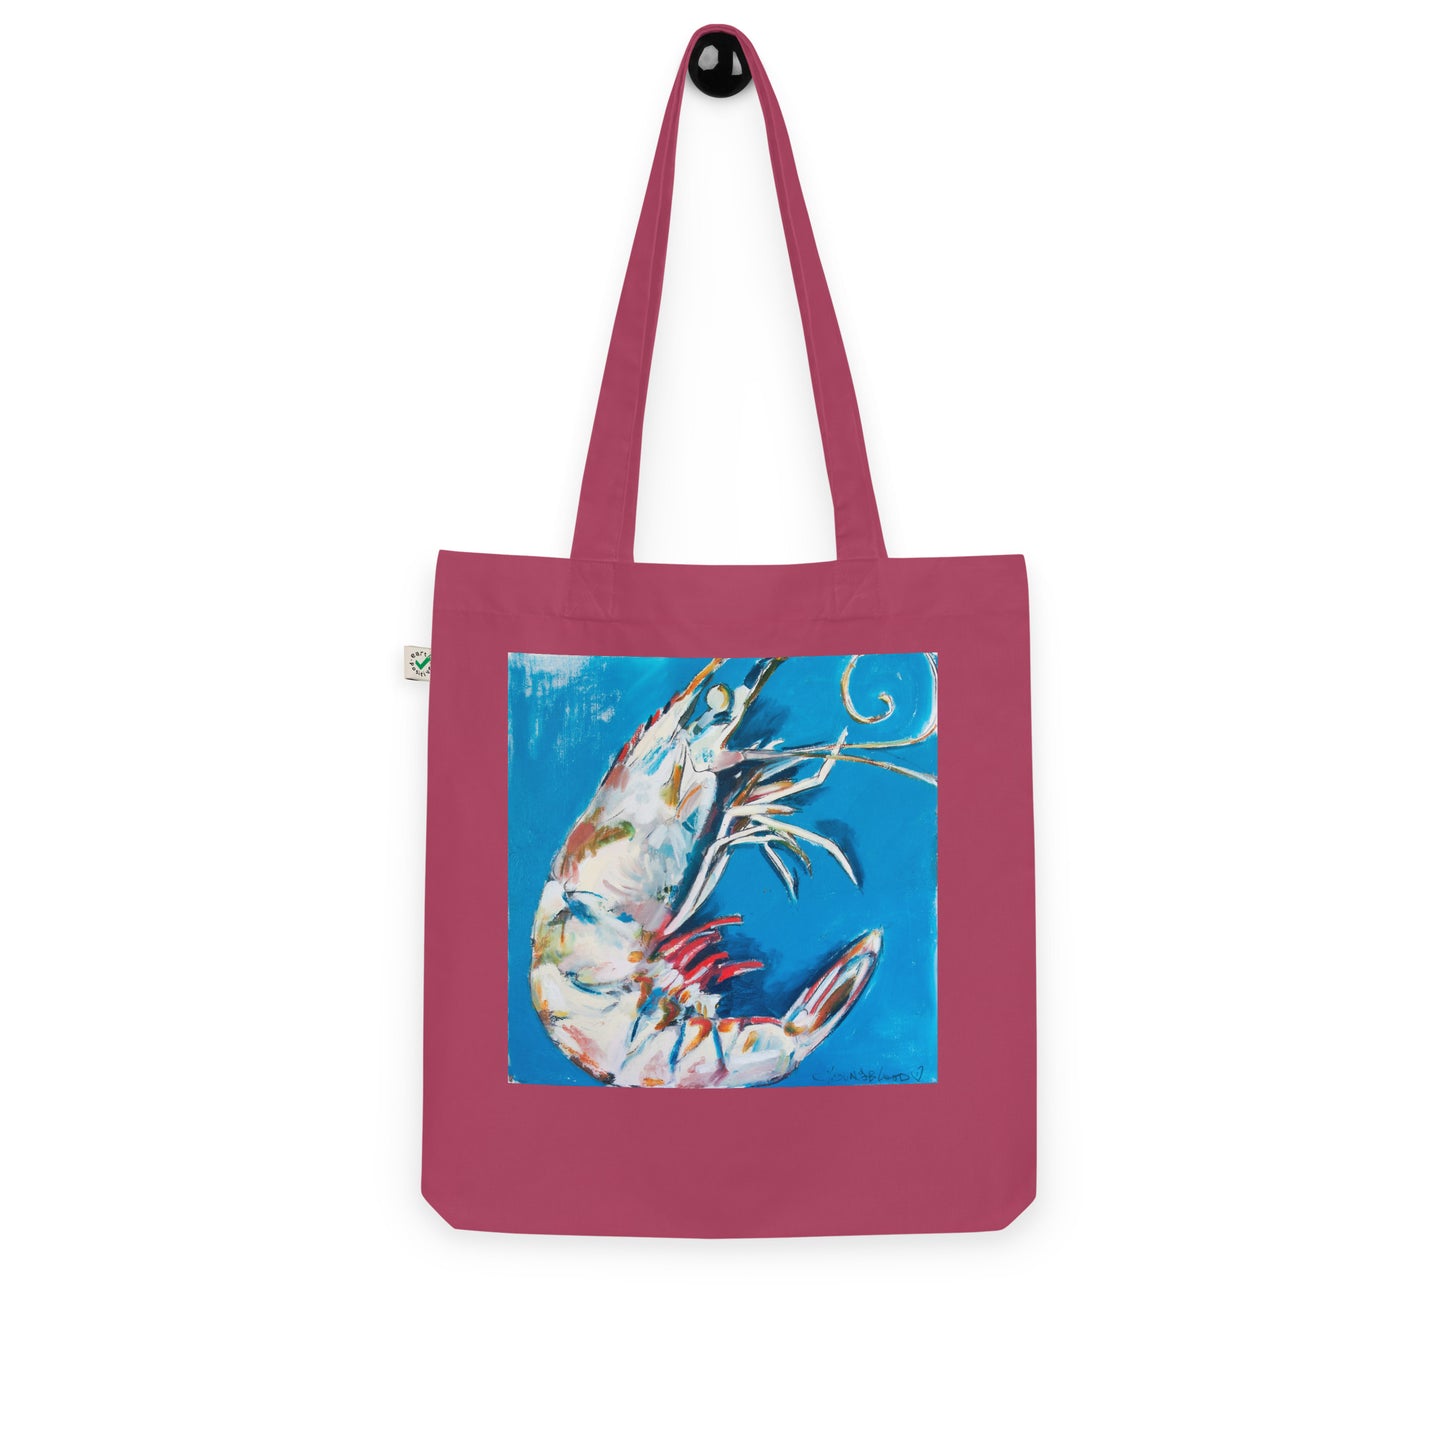 Shrimp with Aqua Blue Organic fashion tote bag